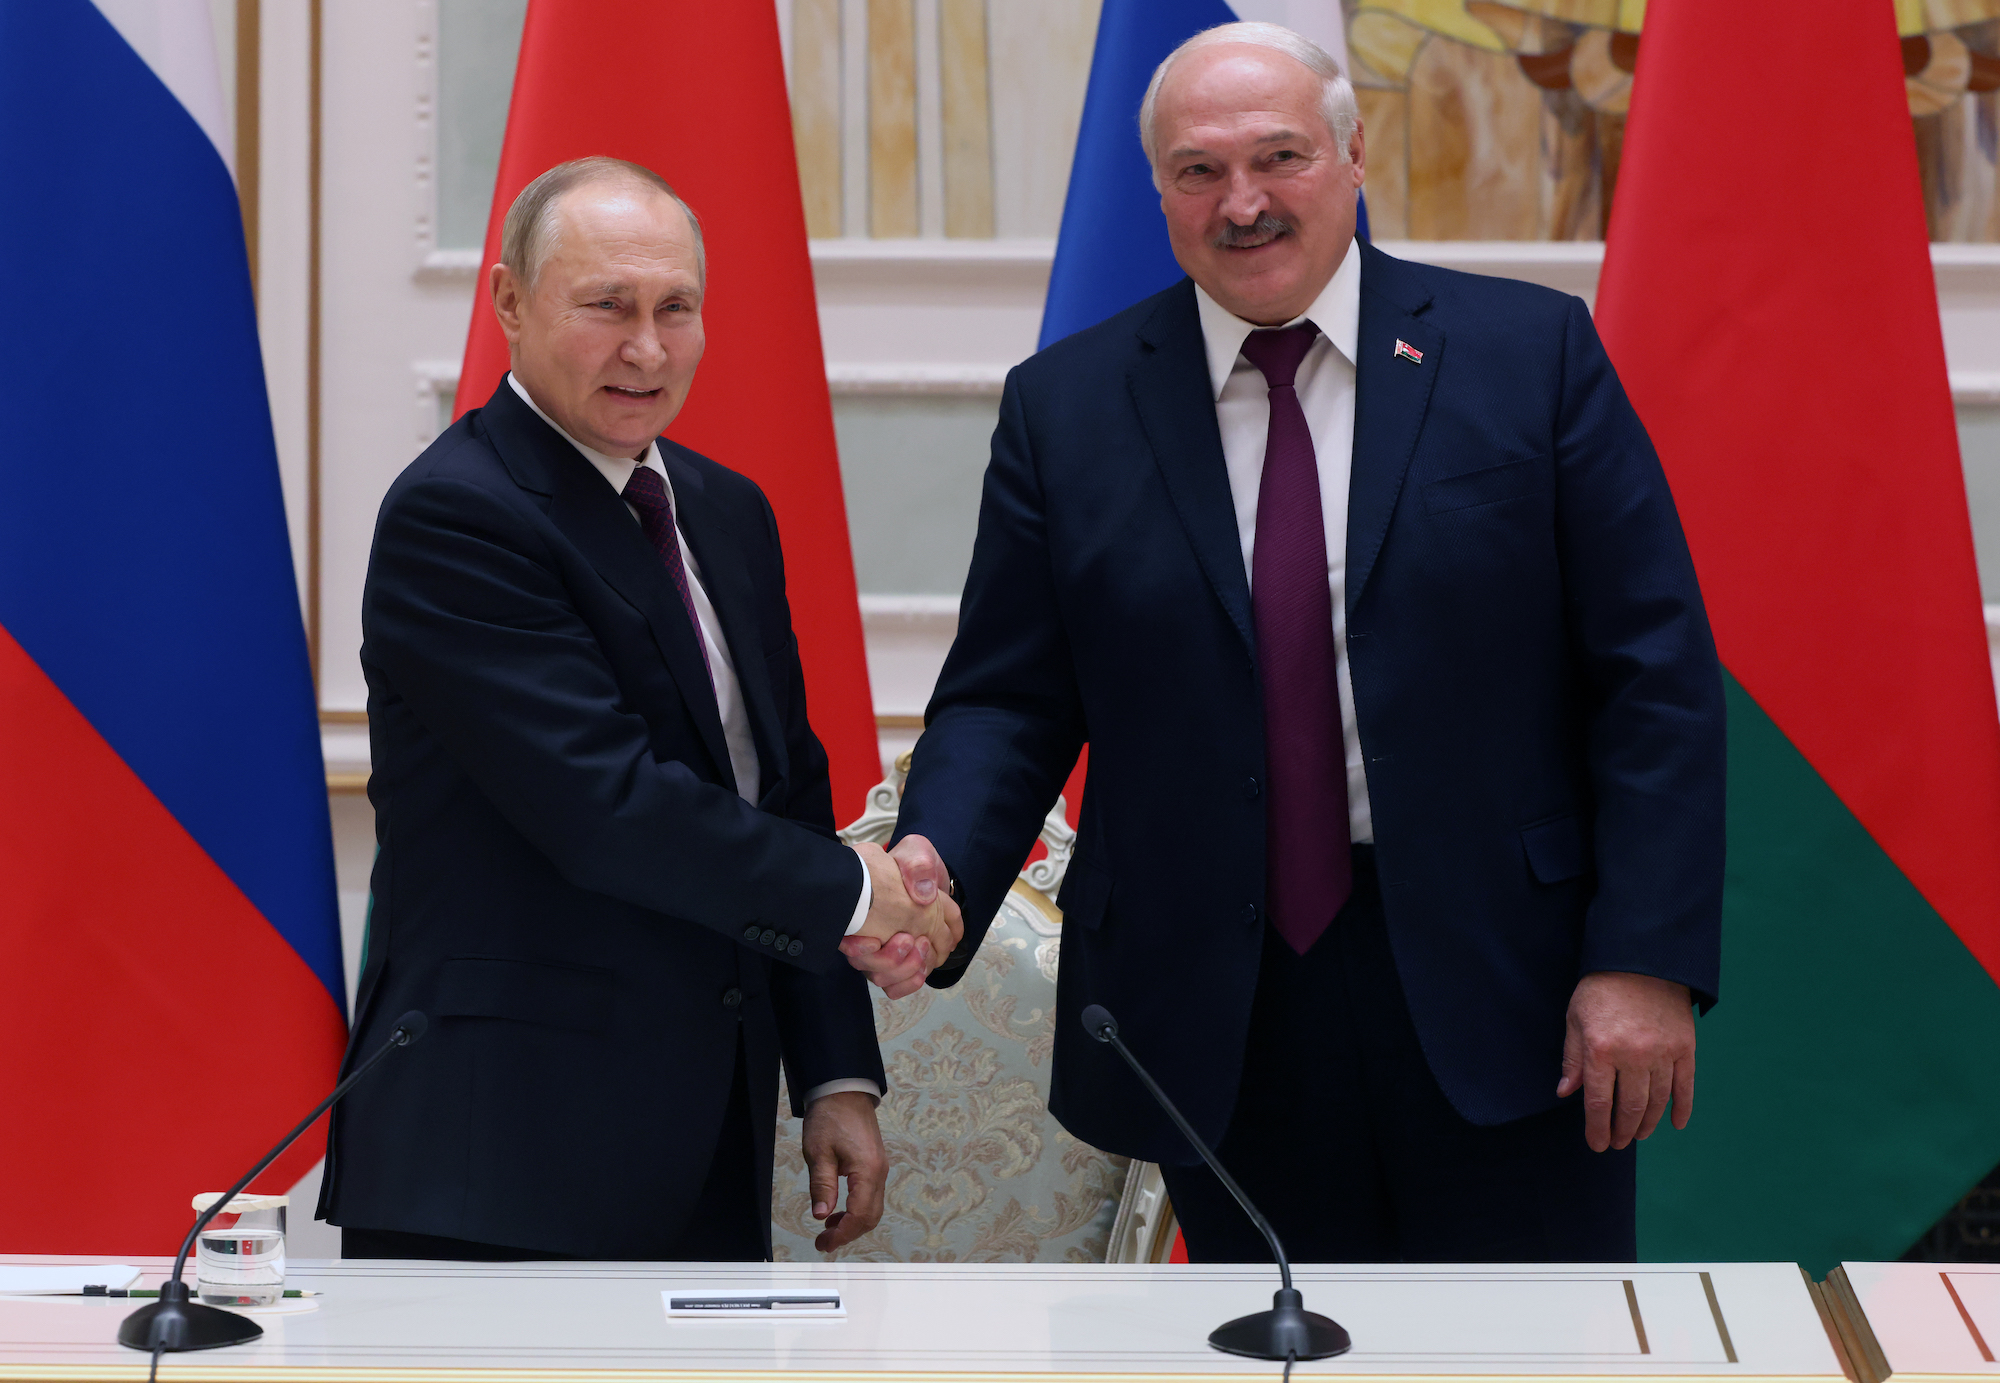 Vladimir Putin and Belarusian President Alexander Lukashenko shake hands before a press conference in Minsk on Monday.